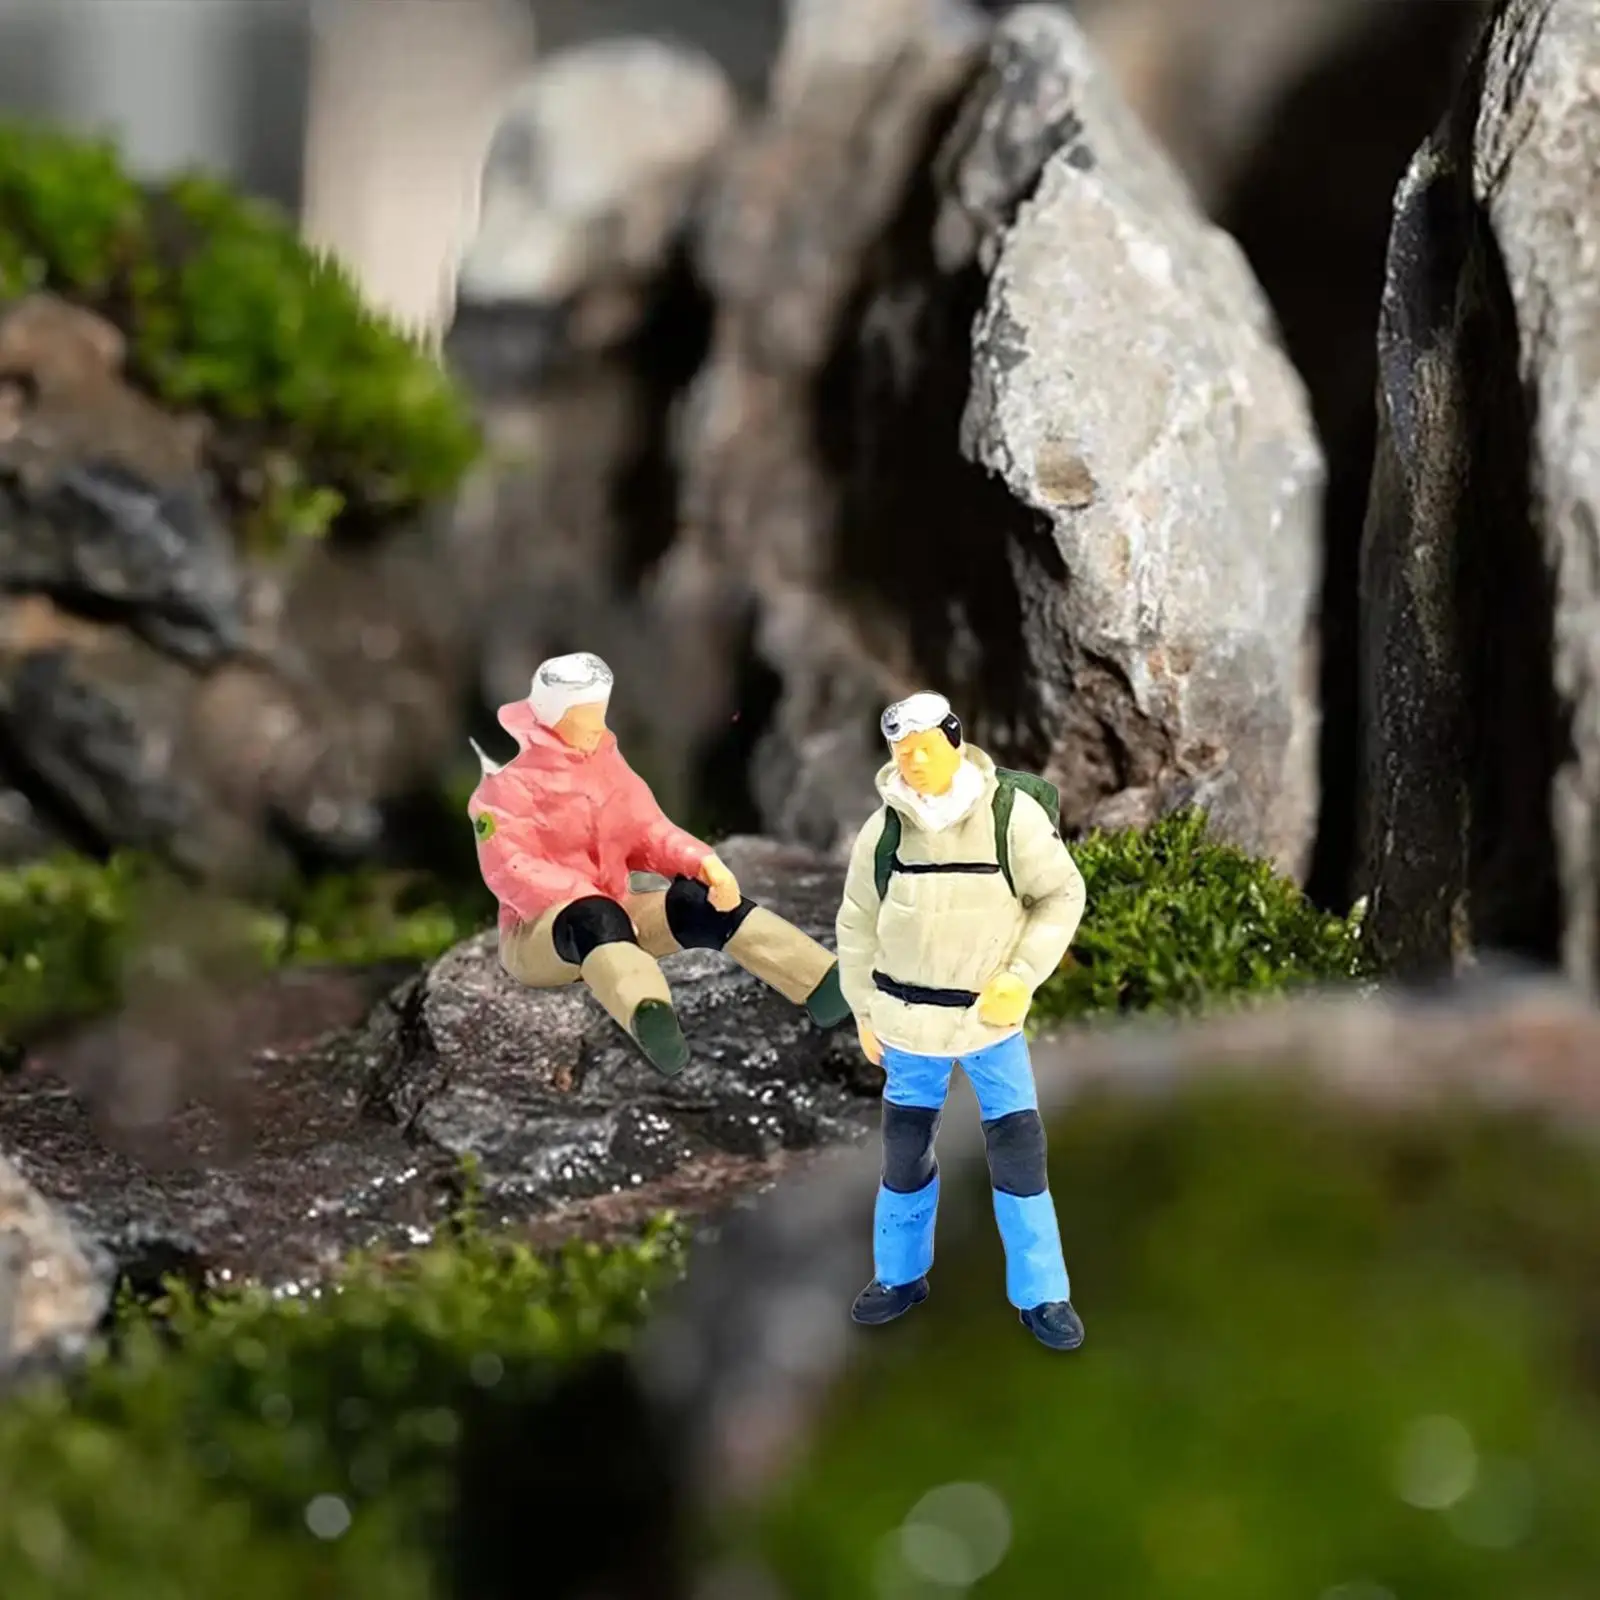 2x 1/87 Miniature Scene People Role Play Figure Dollhouse People for DIY Scene DIY Projects